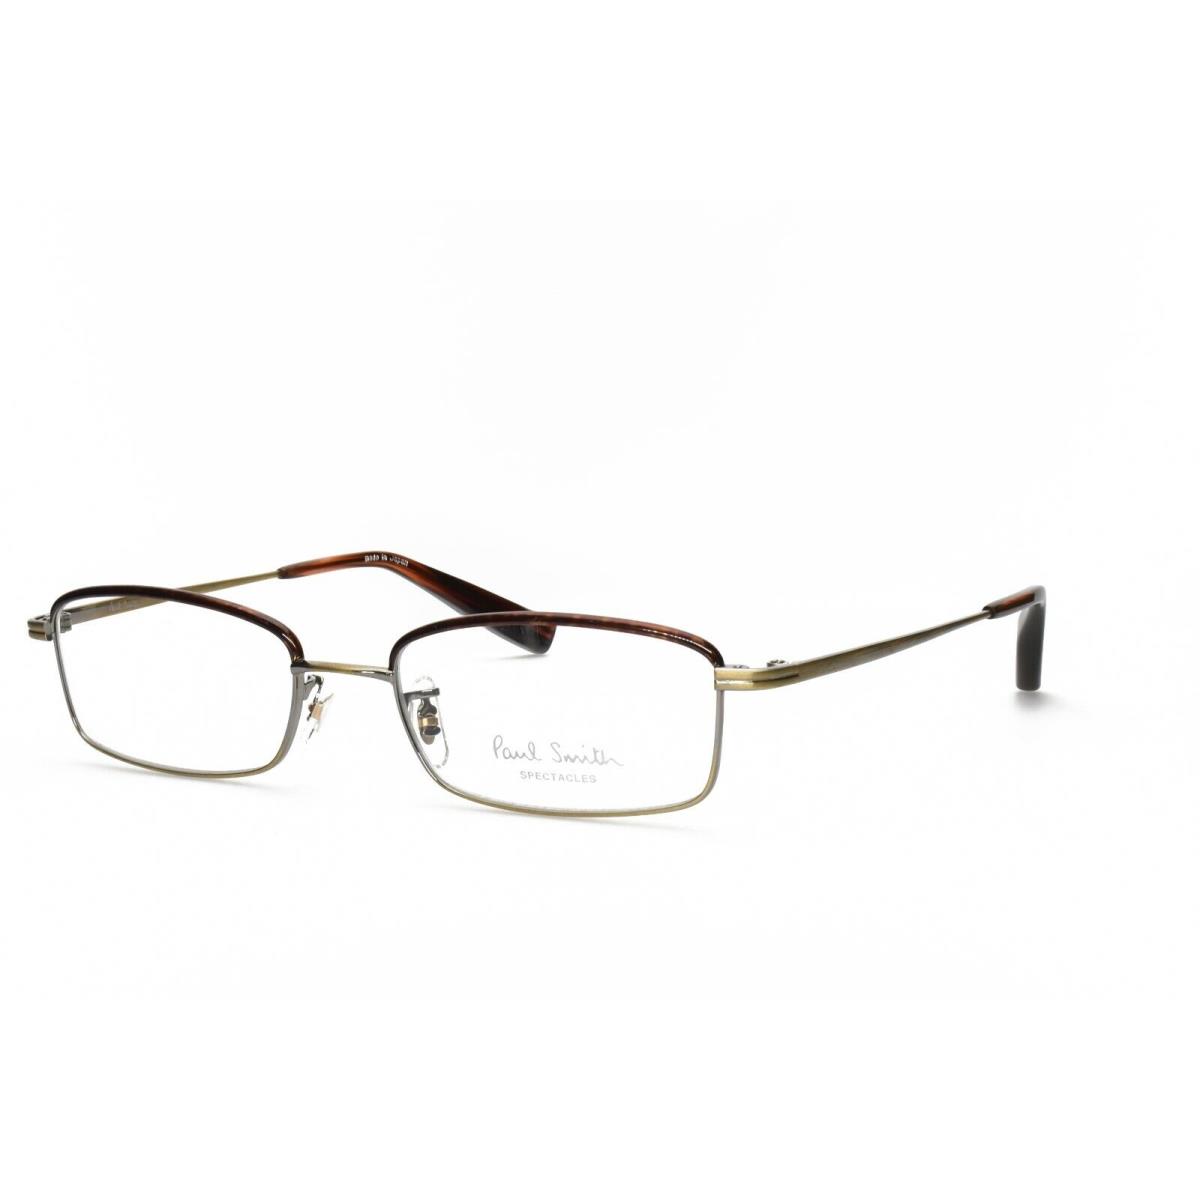 Paul Smith PS 1010 Kt/tw Eyeglasses Frames Only 50-18-140